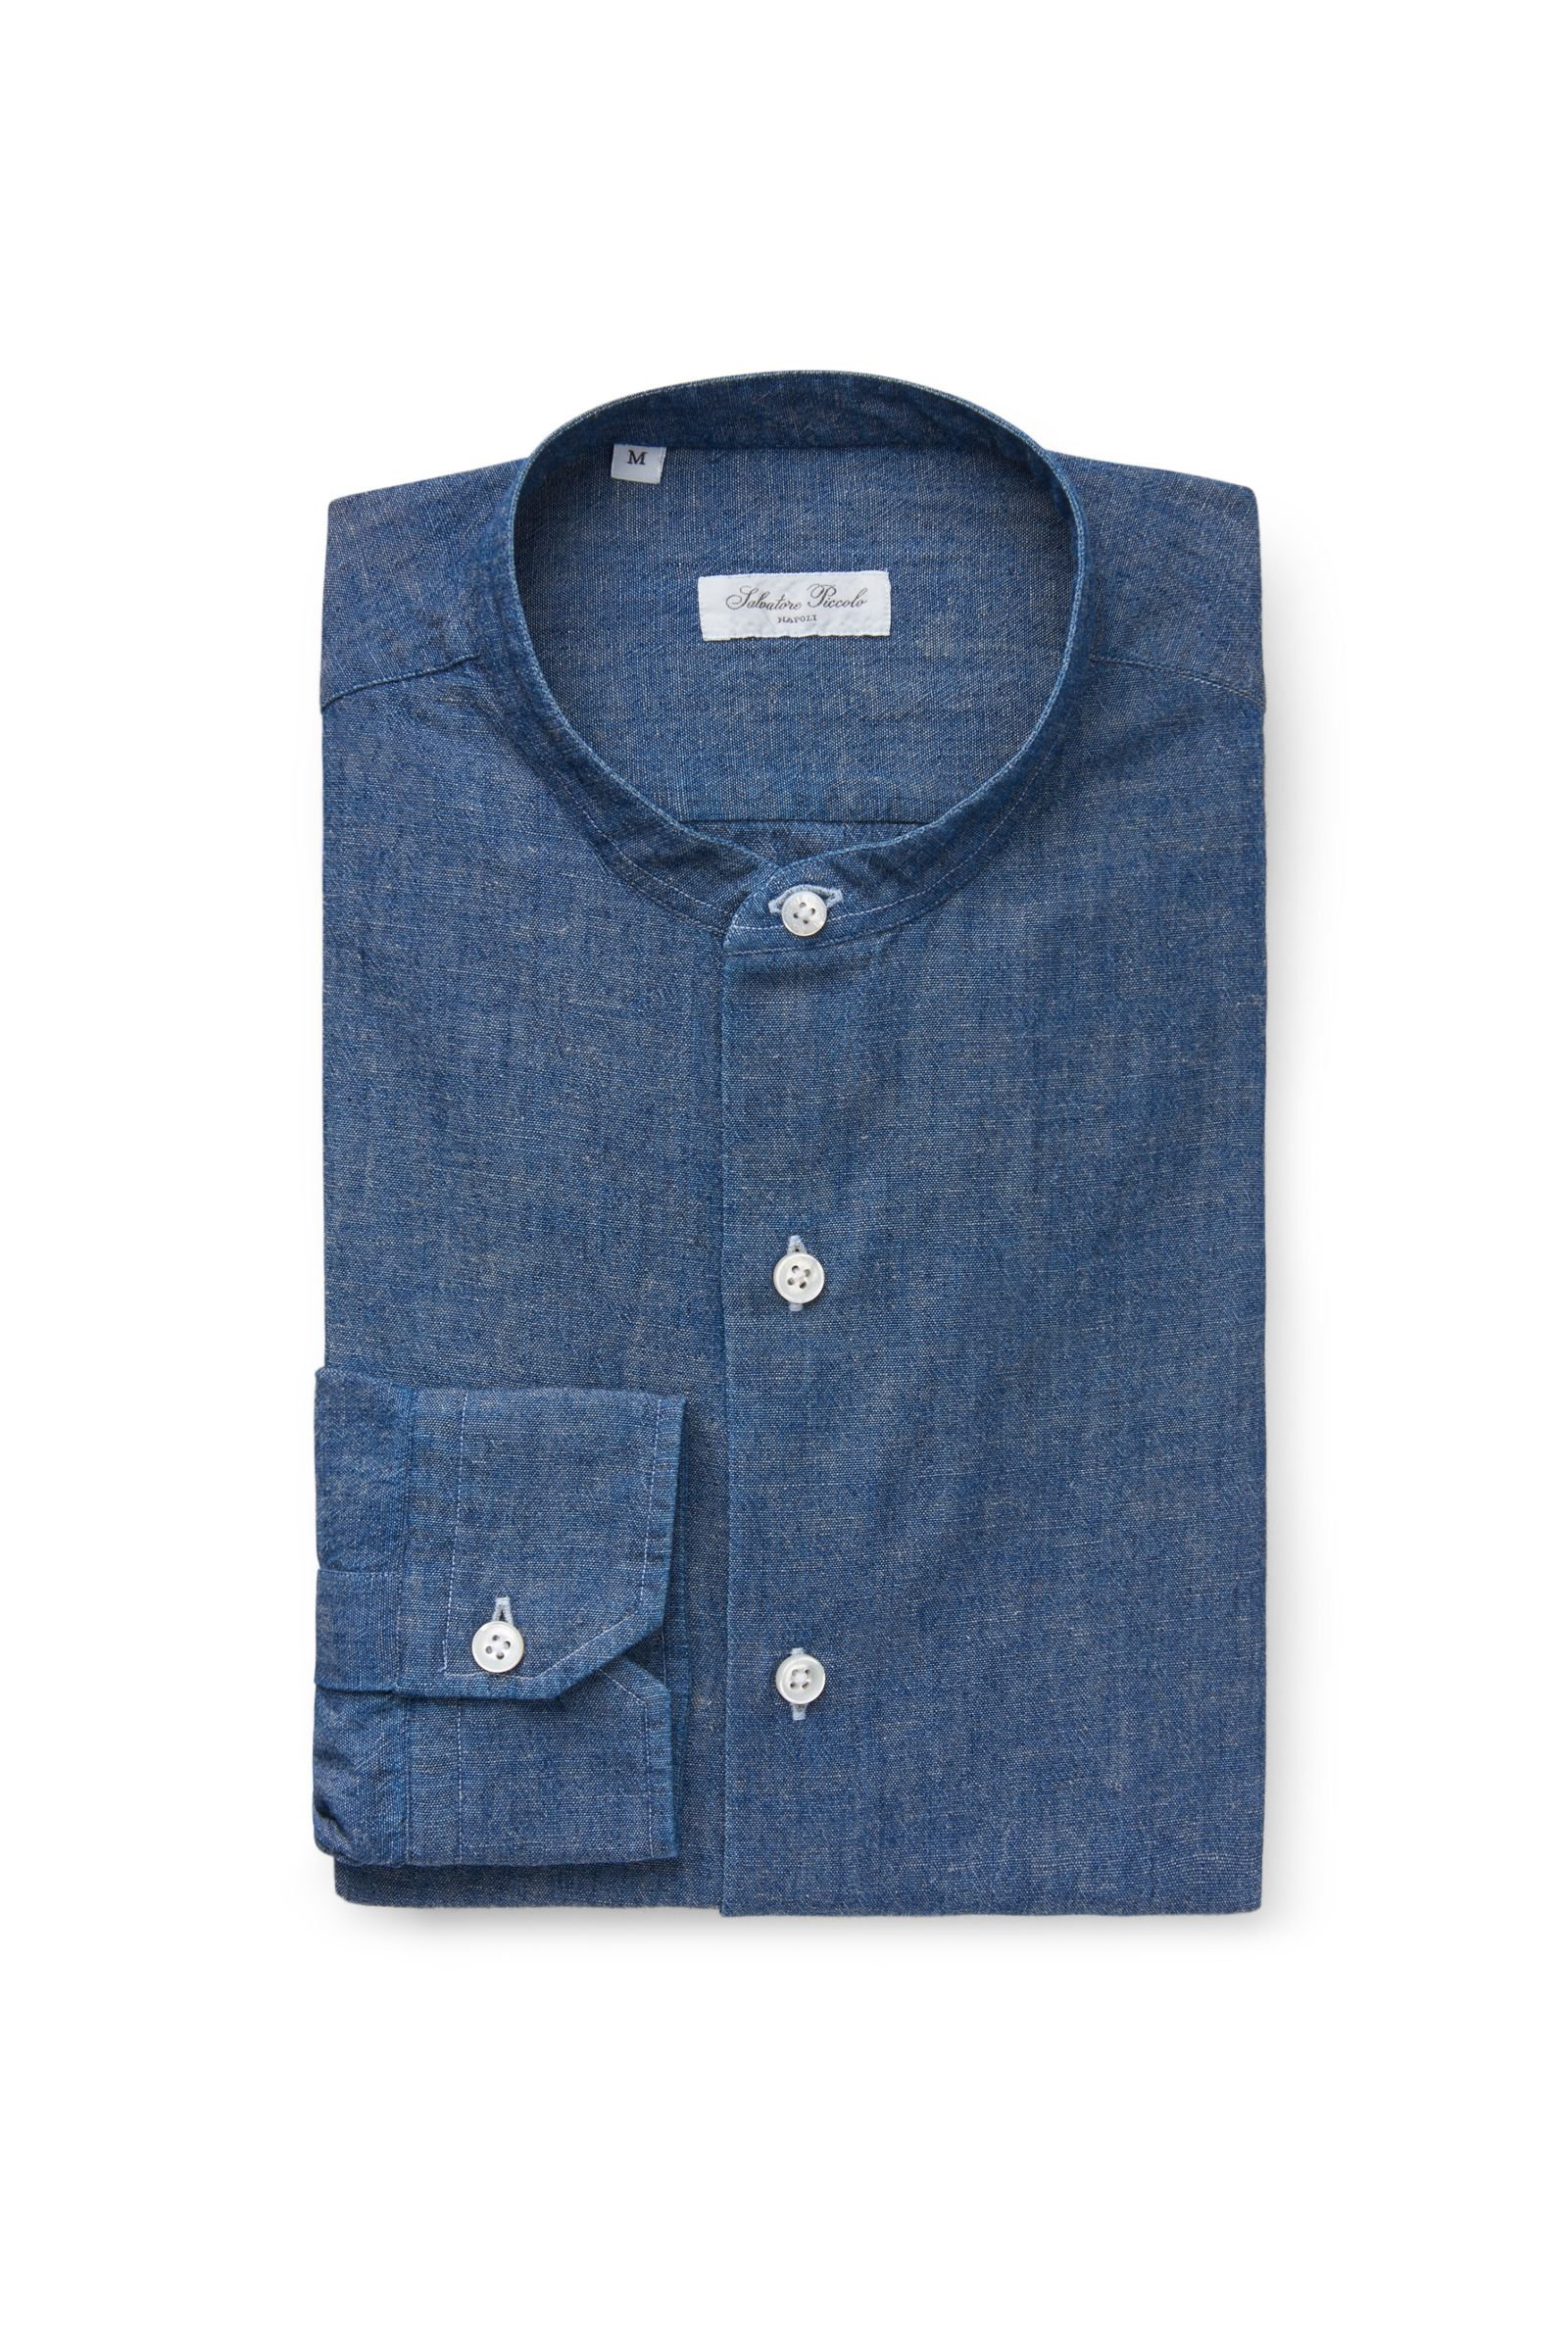 Chambray shirt 'Robert' Grandad collar grey-blue